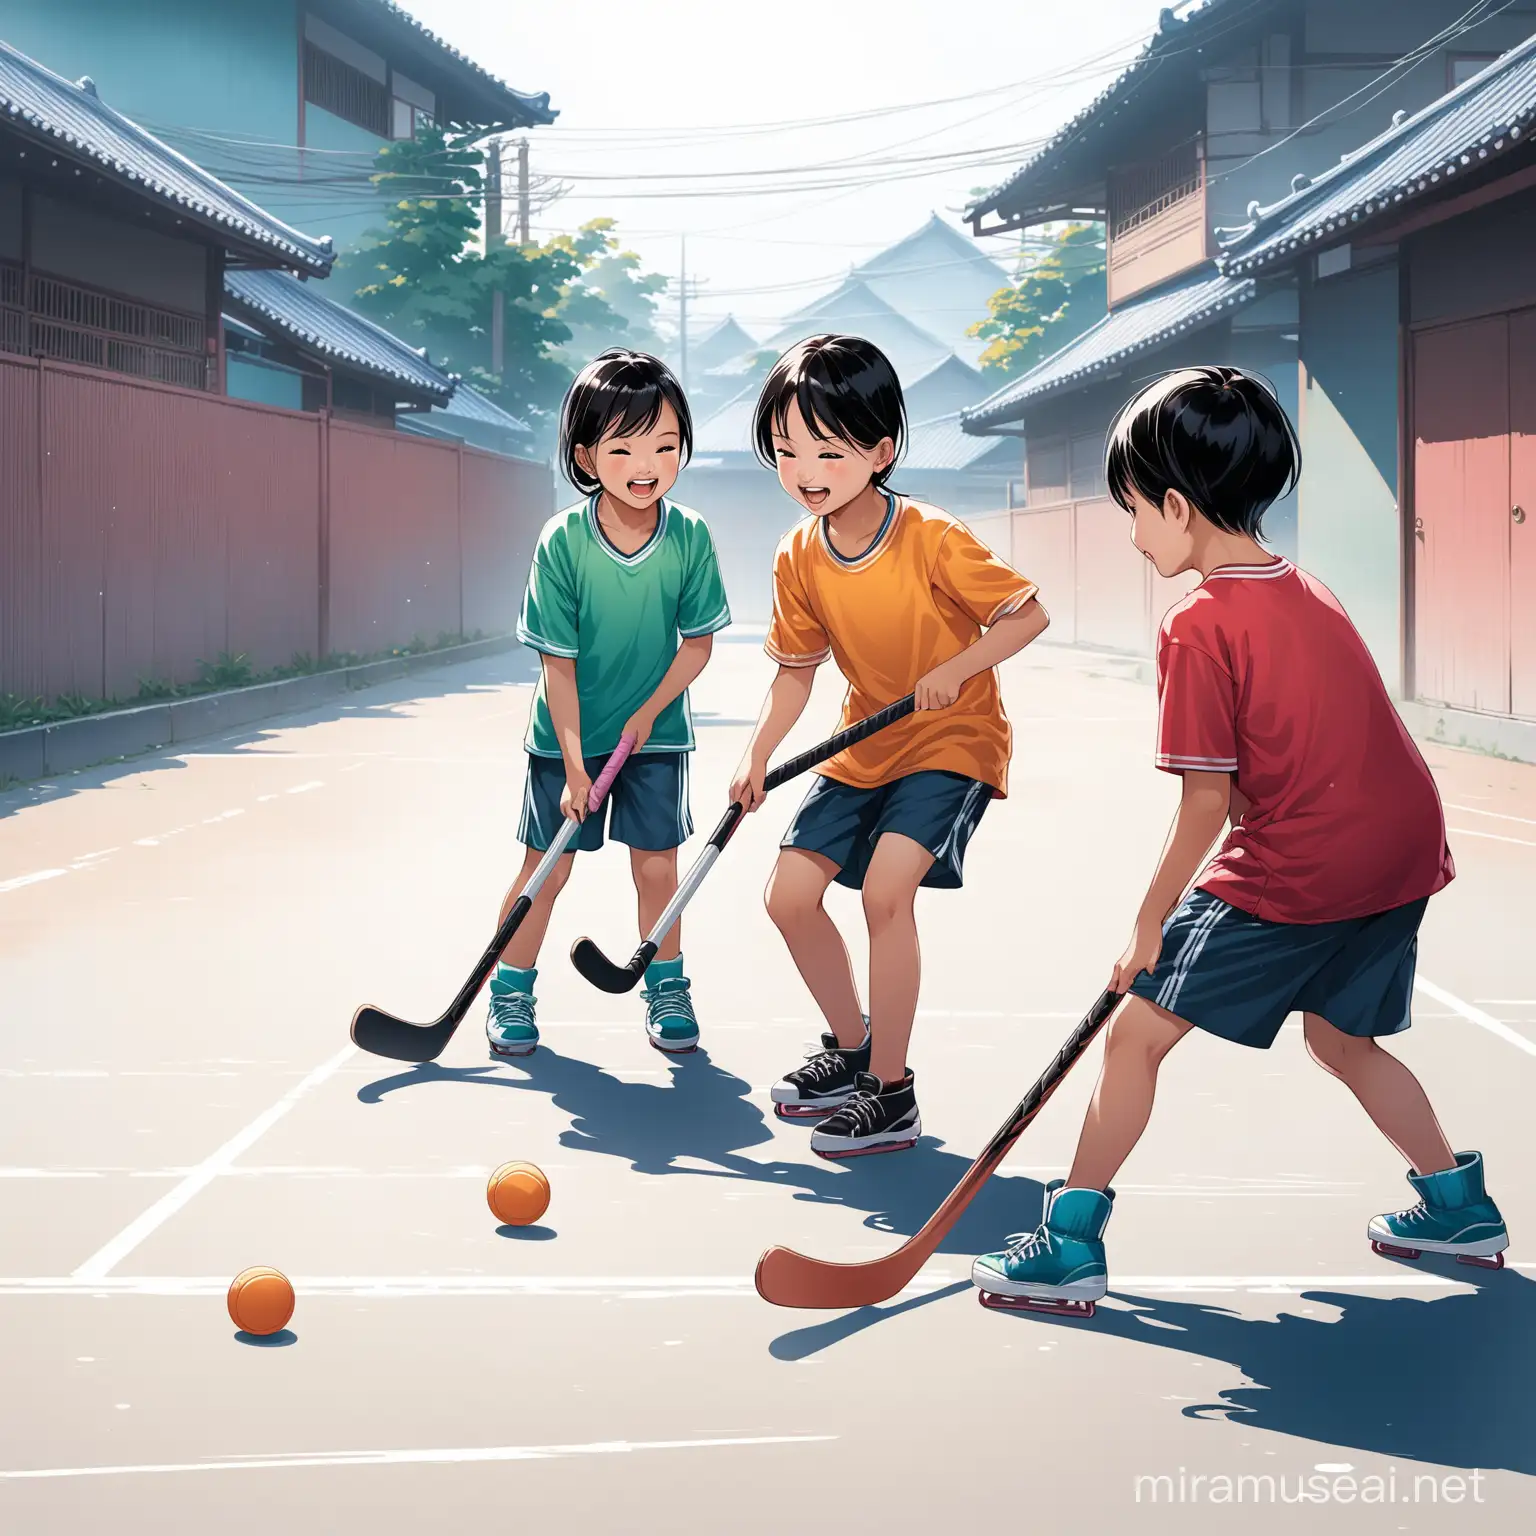 Asian Children Enjoying Street Hockey Game